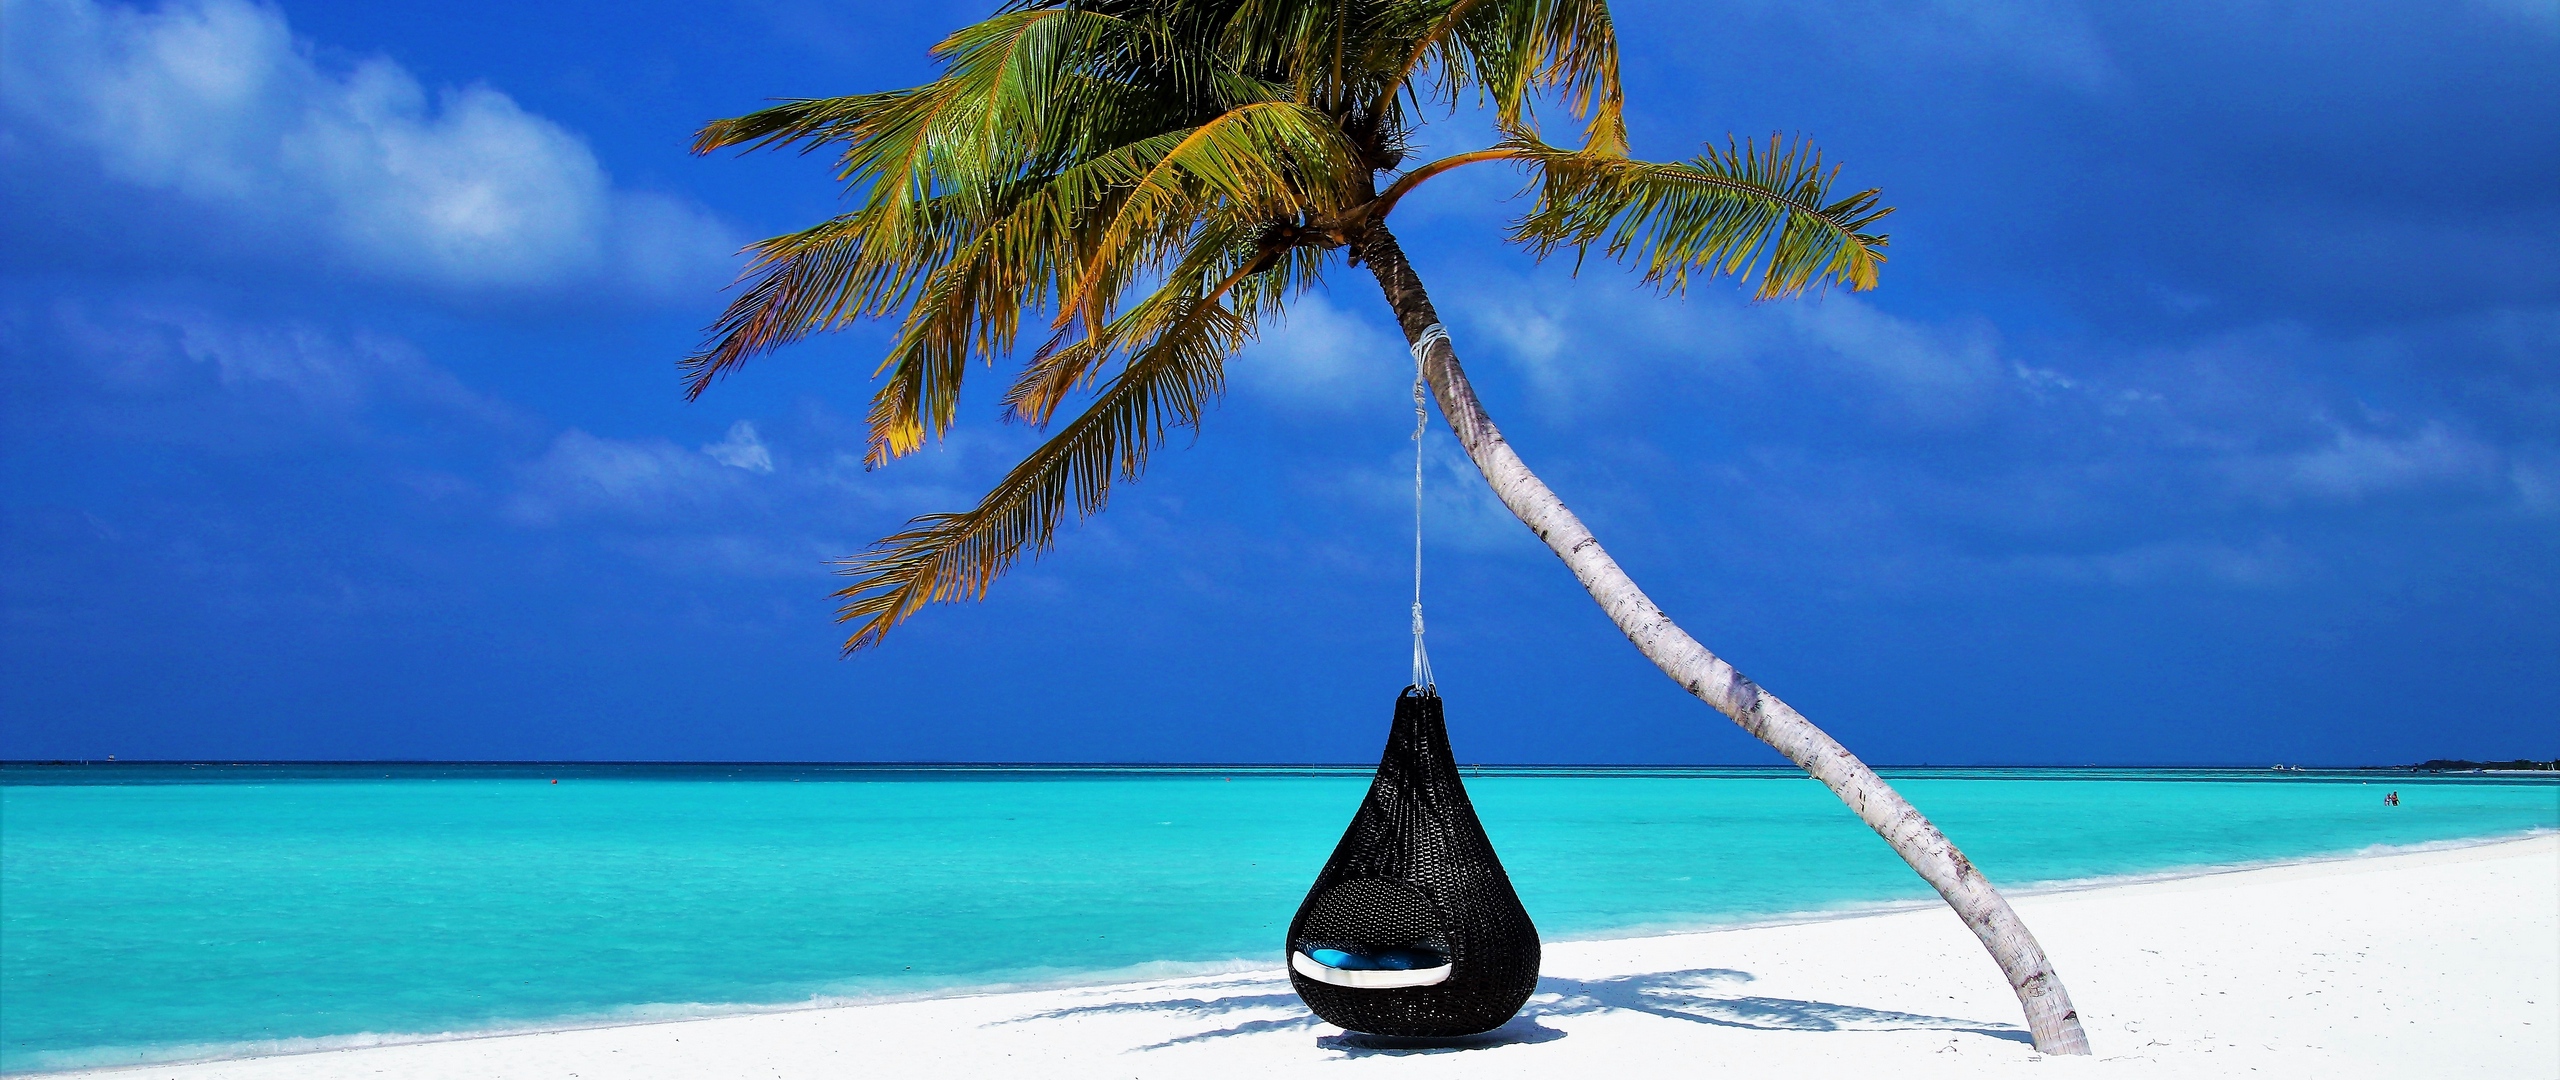 Download wallpaper 2560x1080 maldives, palm, beach, relax